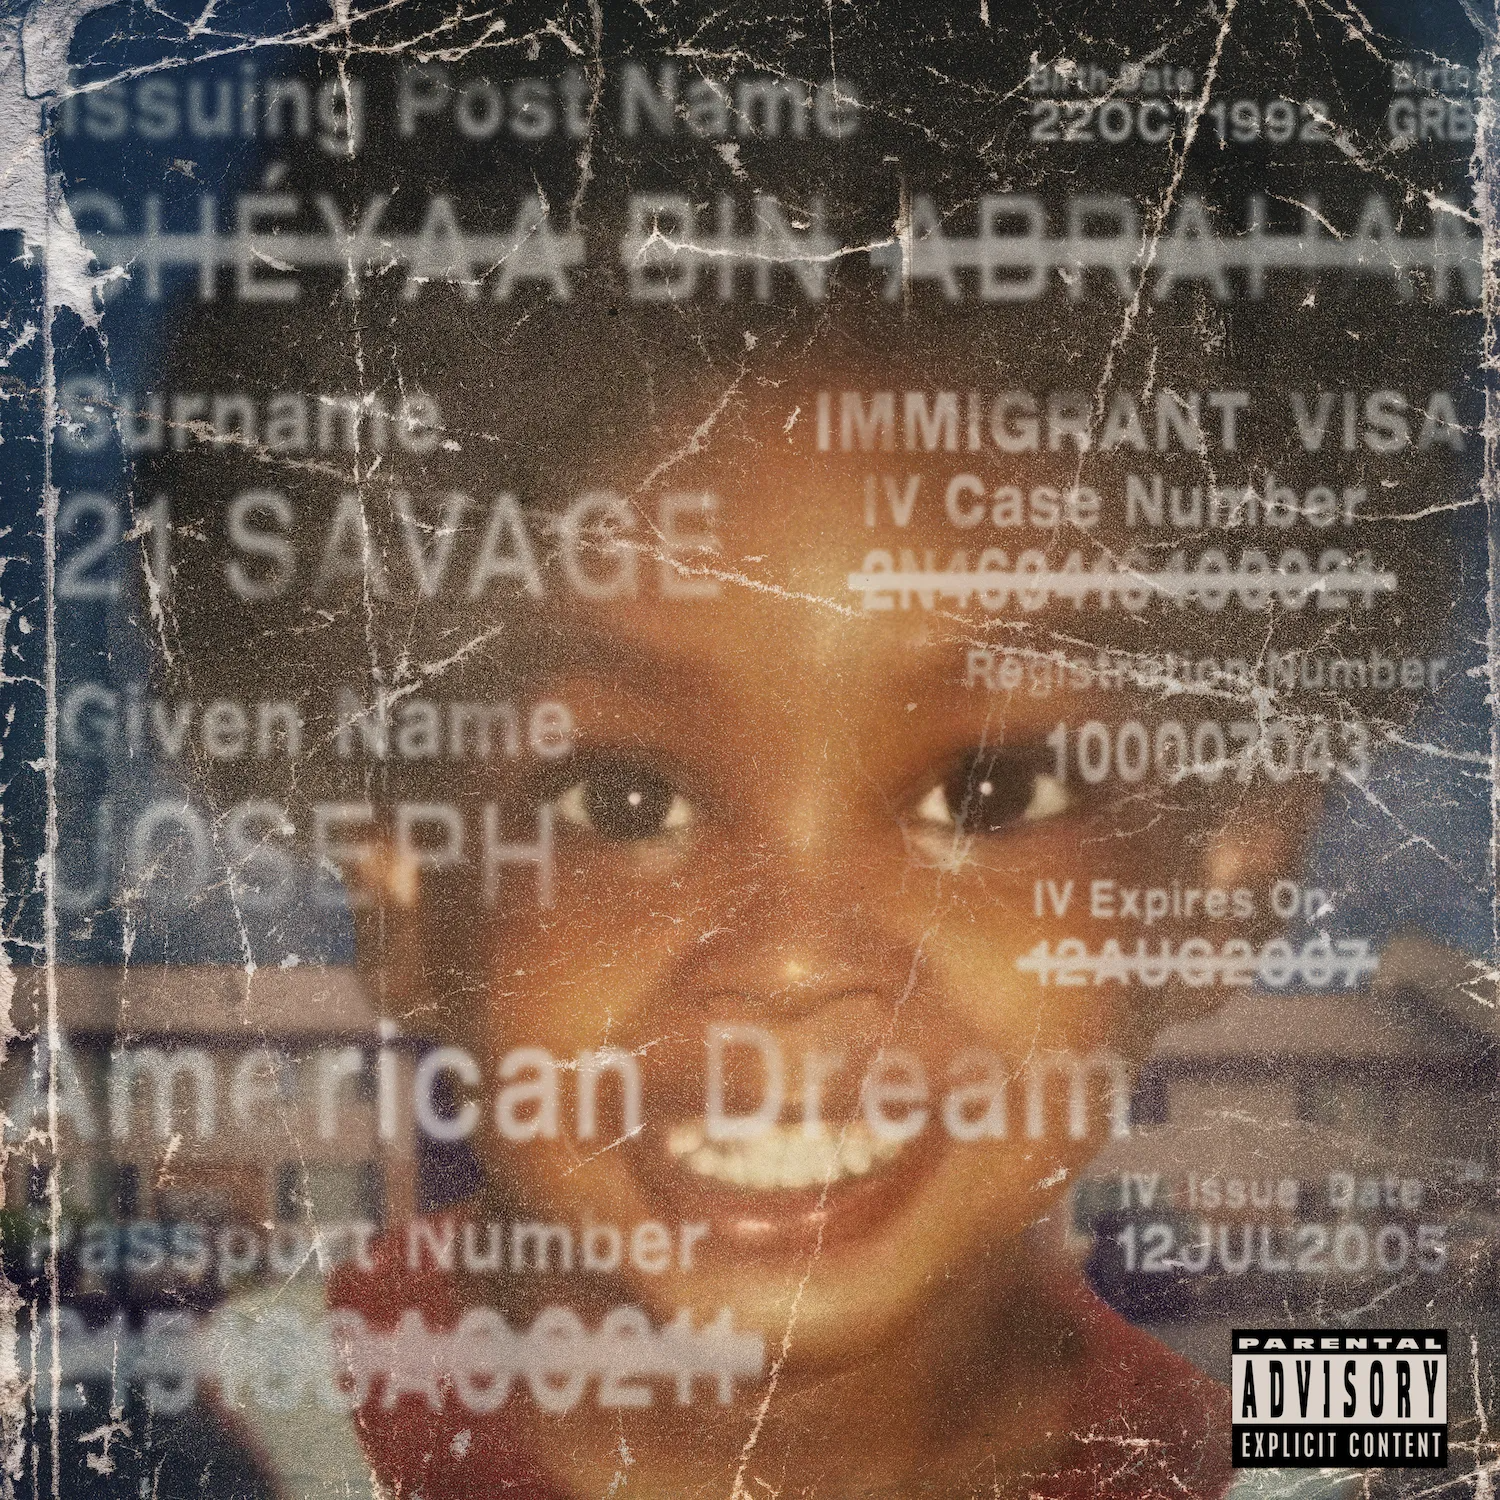 21 Savage american dream Mp3 Download